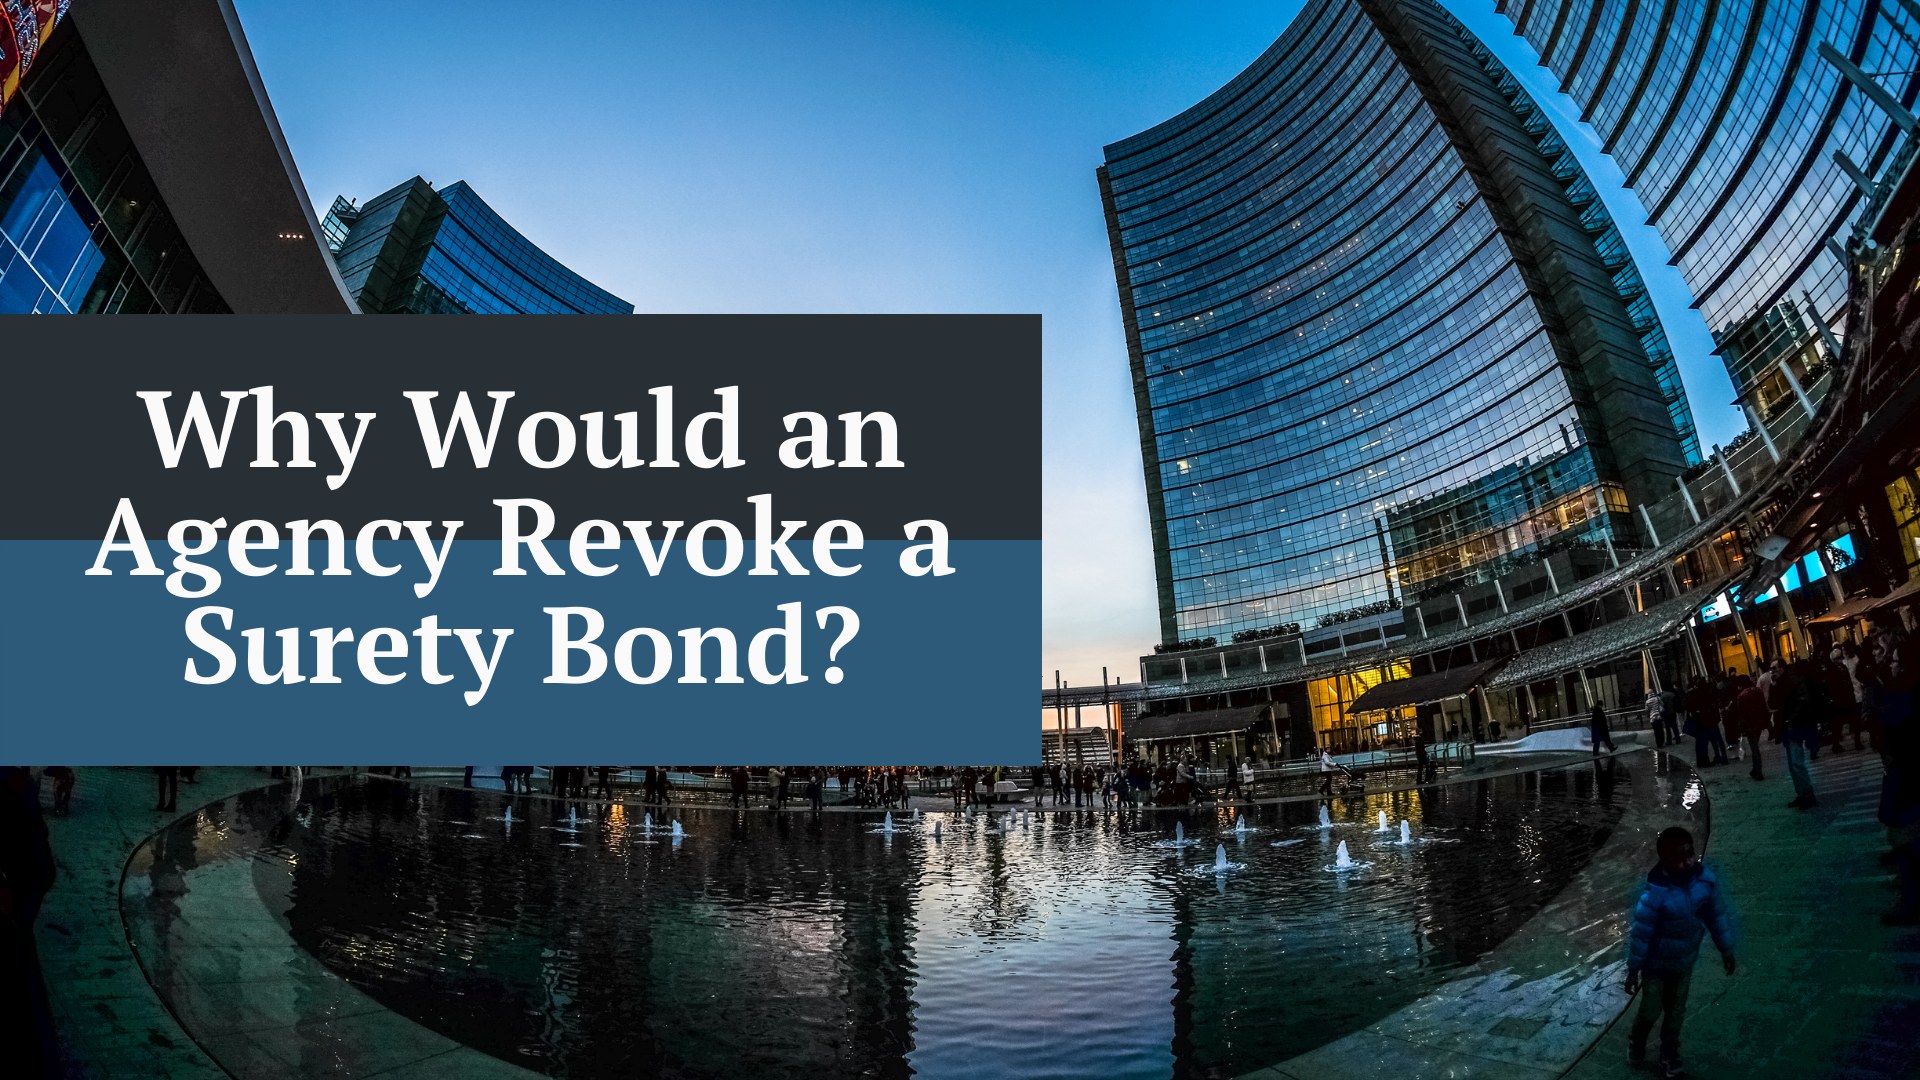 surety bond - What is a surety bond - buildings